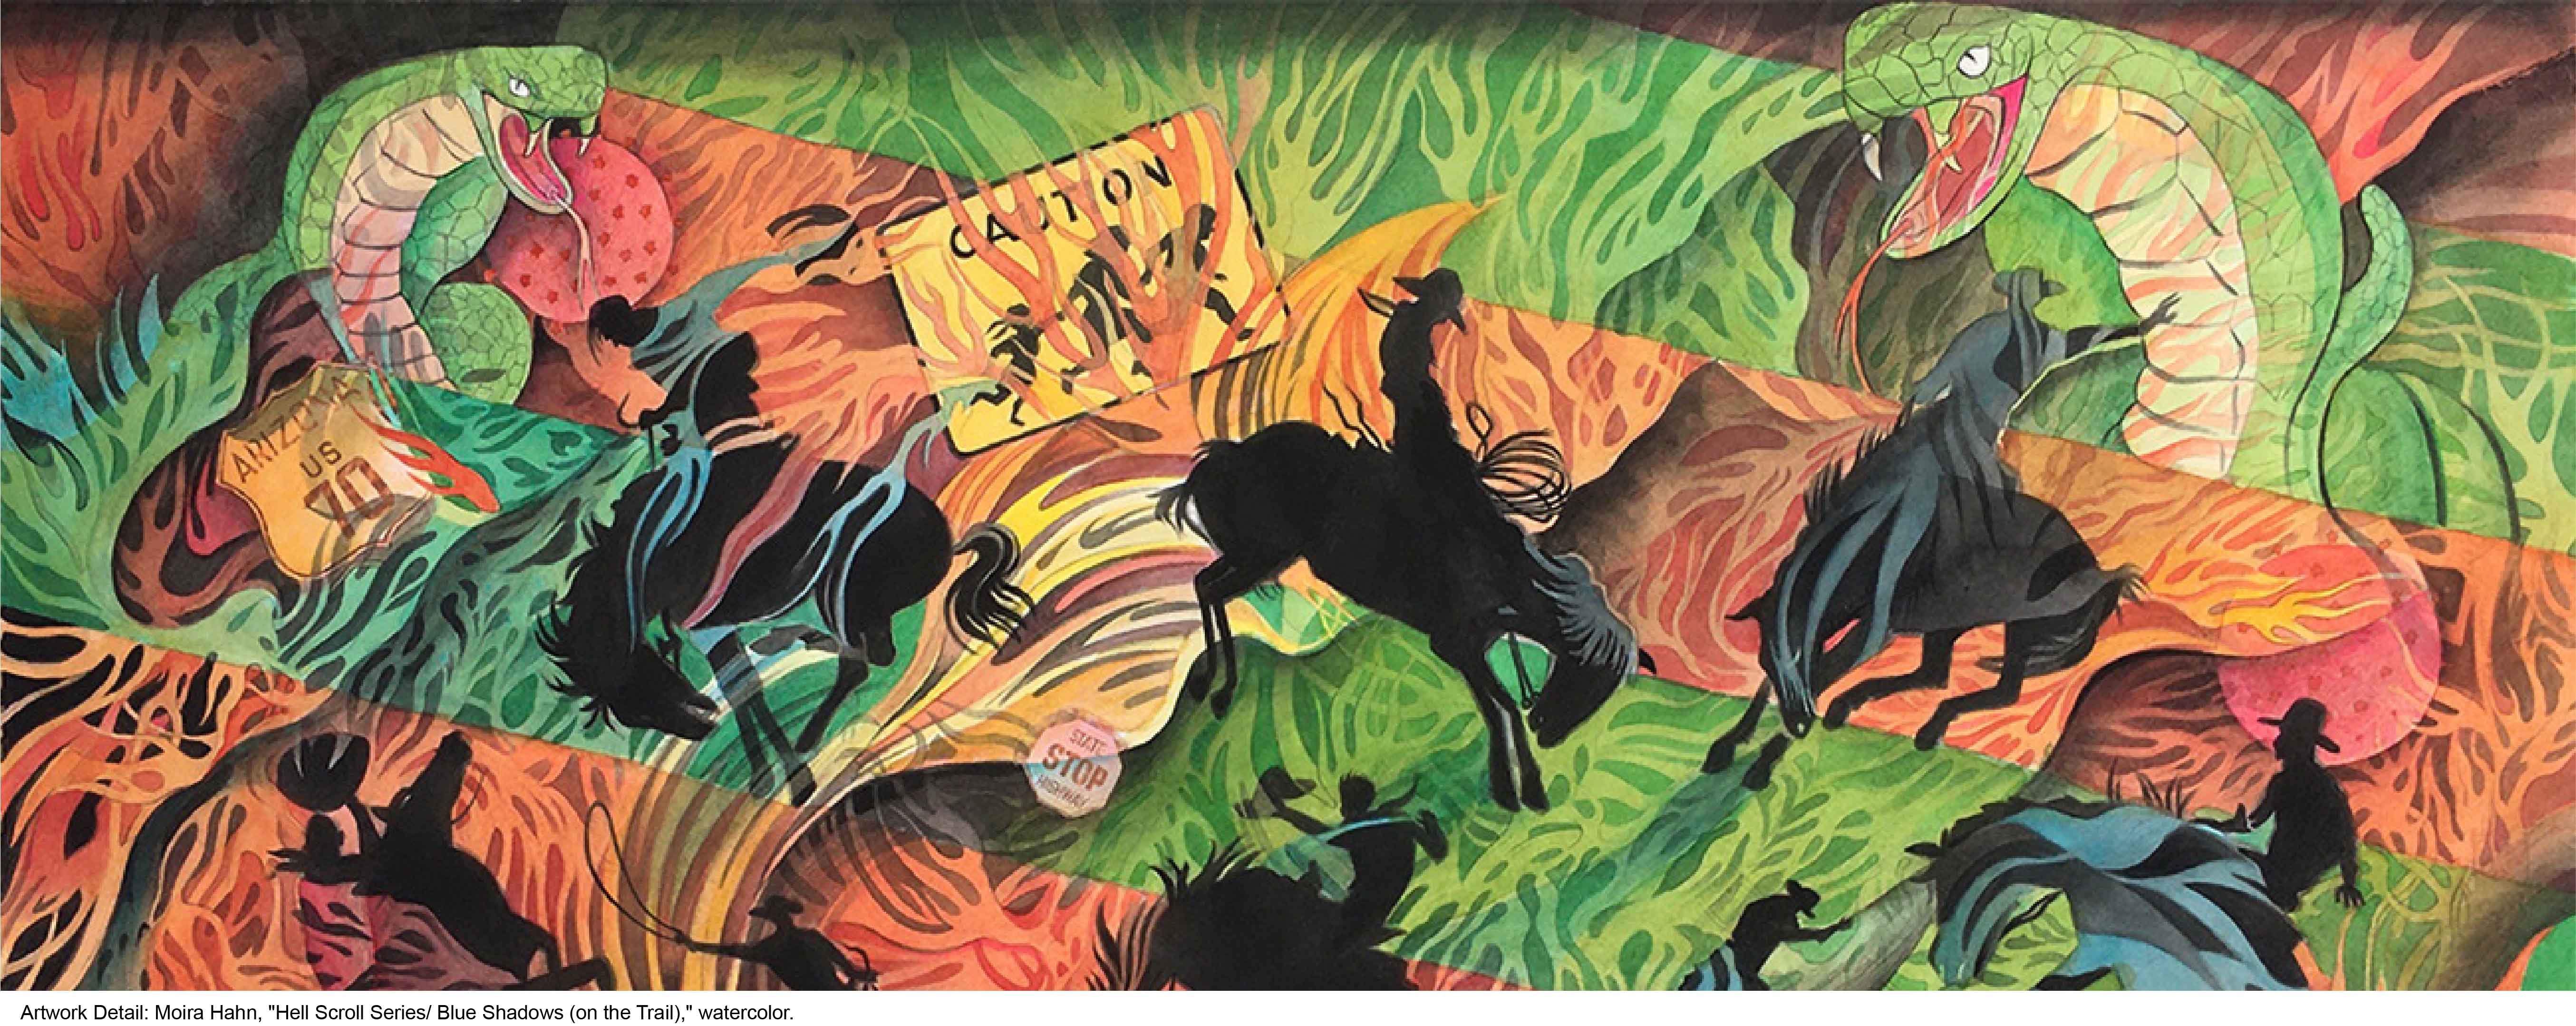 Artwork Detail of cowboy shadows riding through green and orange flames: Moira Hahn, "Hell Scroll Series/ Blue Shadows (on the Trail)," watercolor.